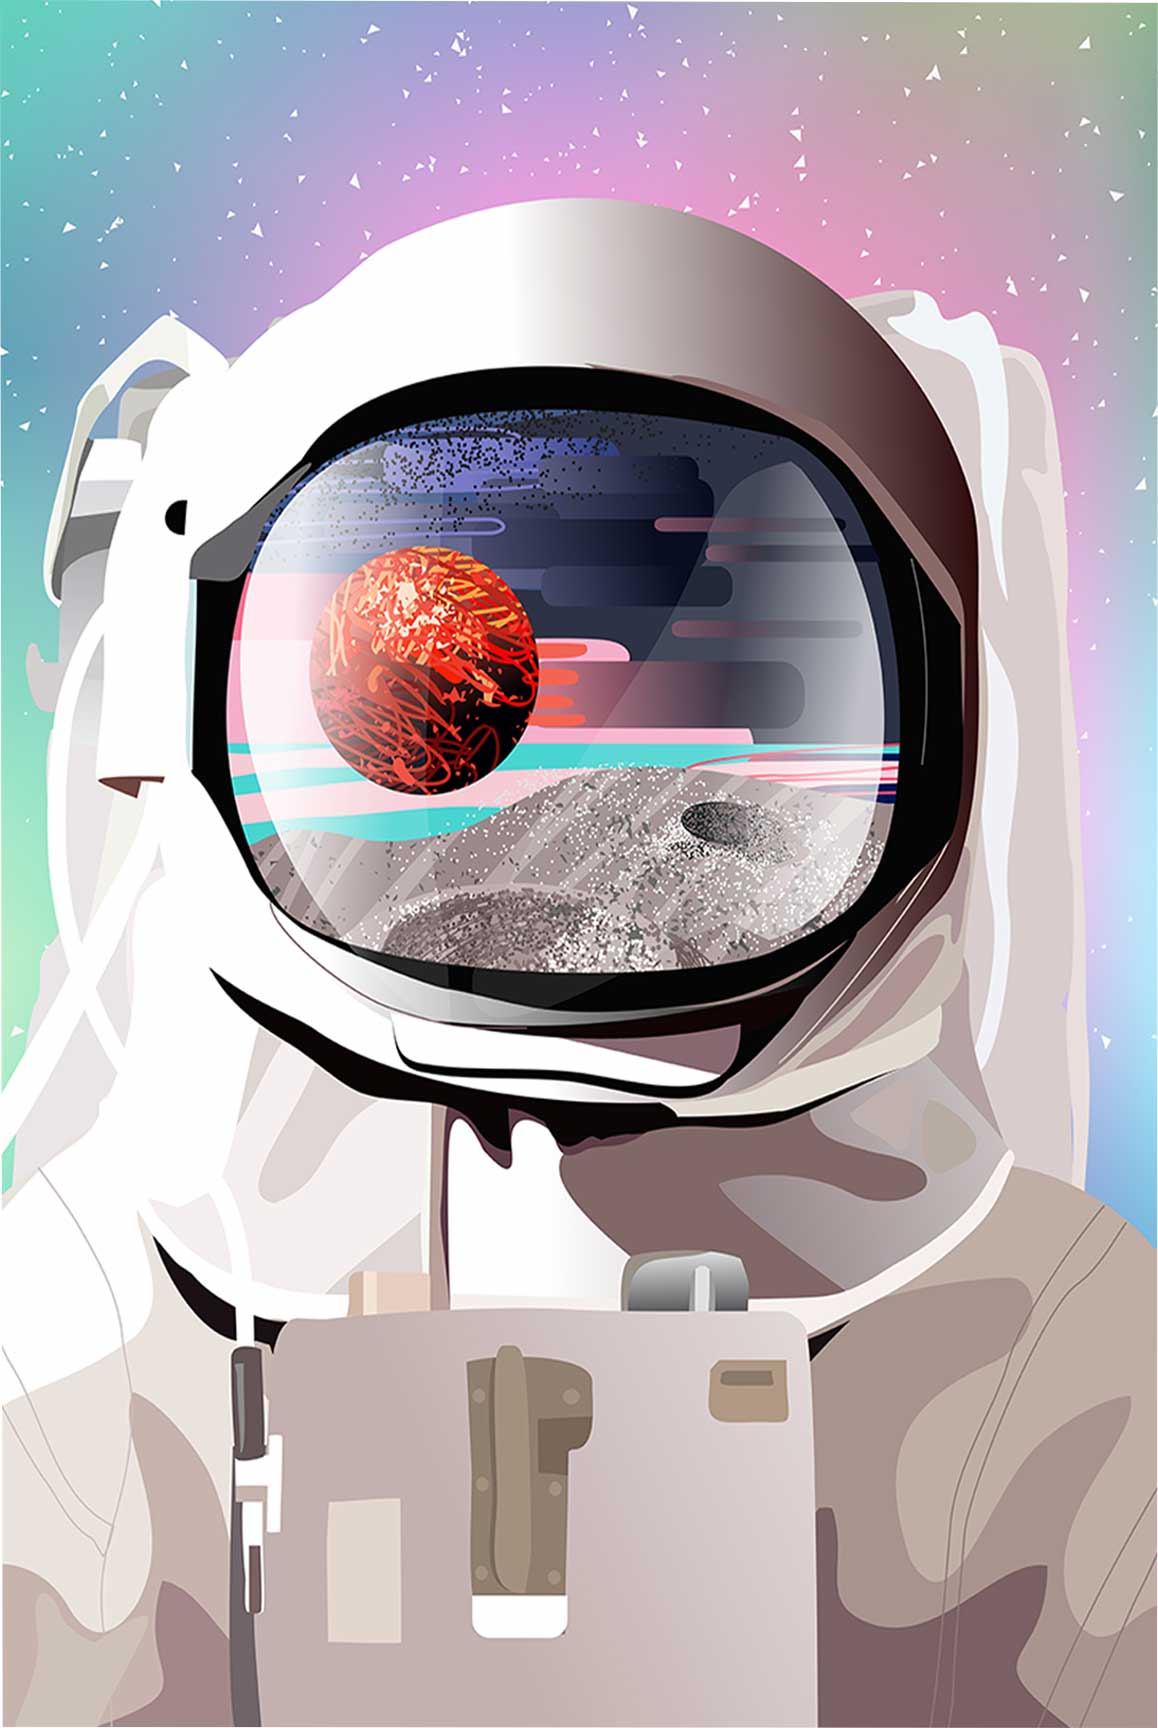 Quadro Retangular  -  Astronauta